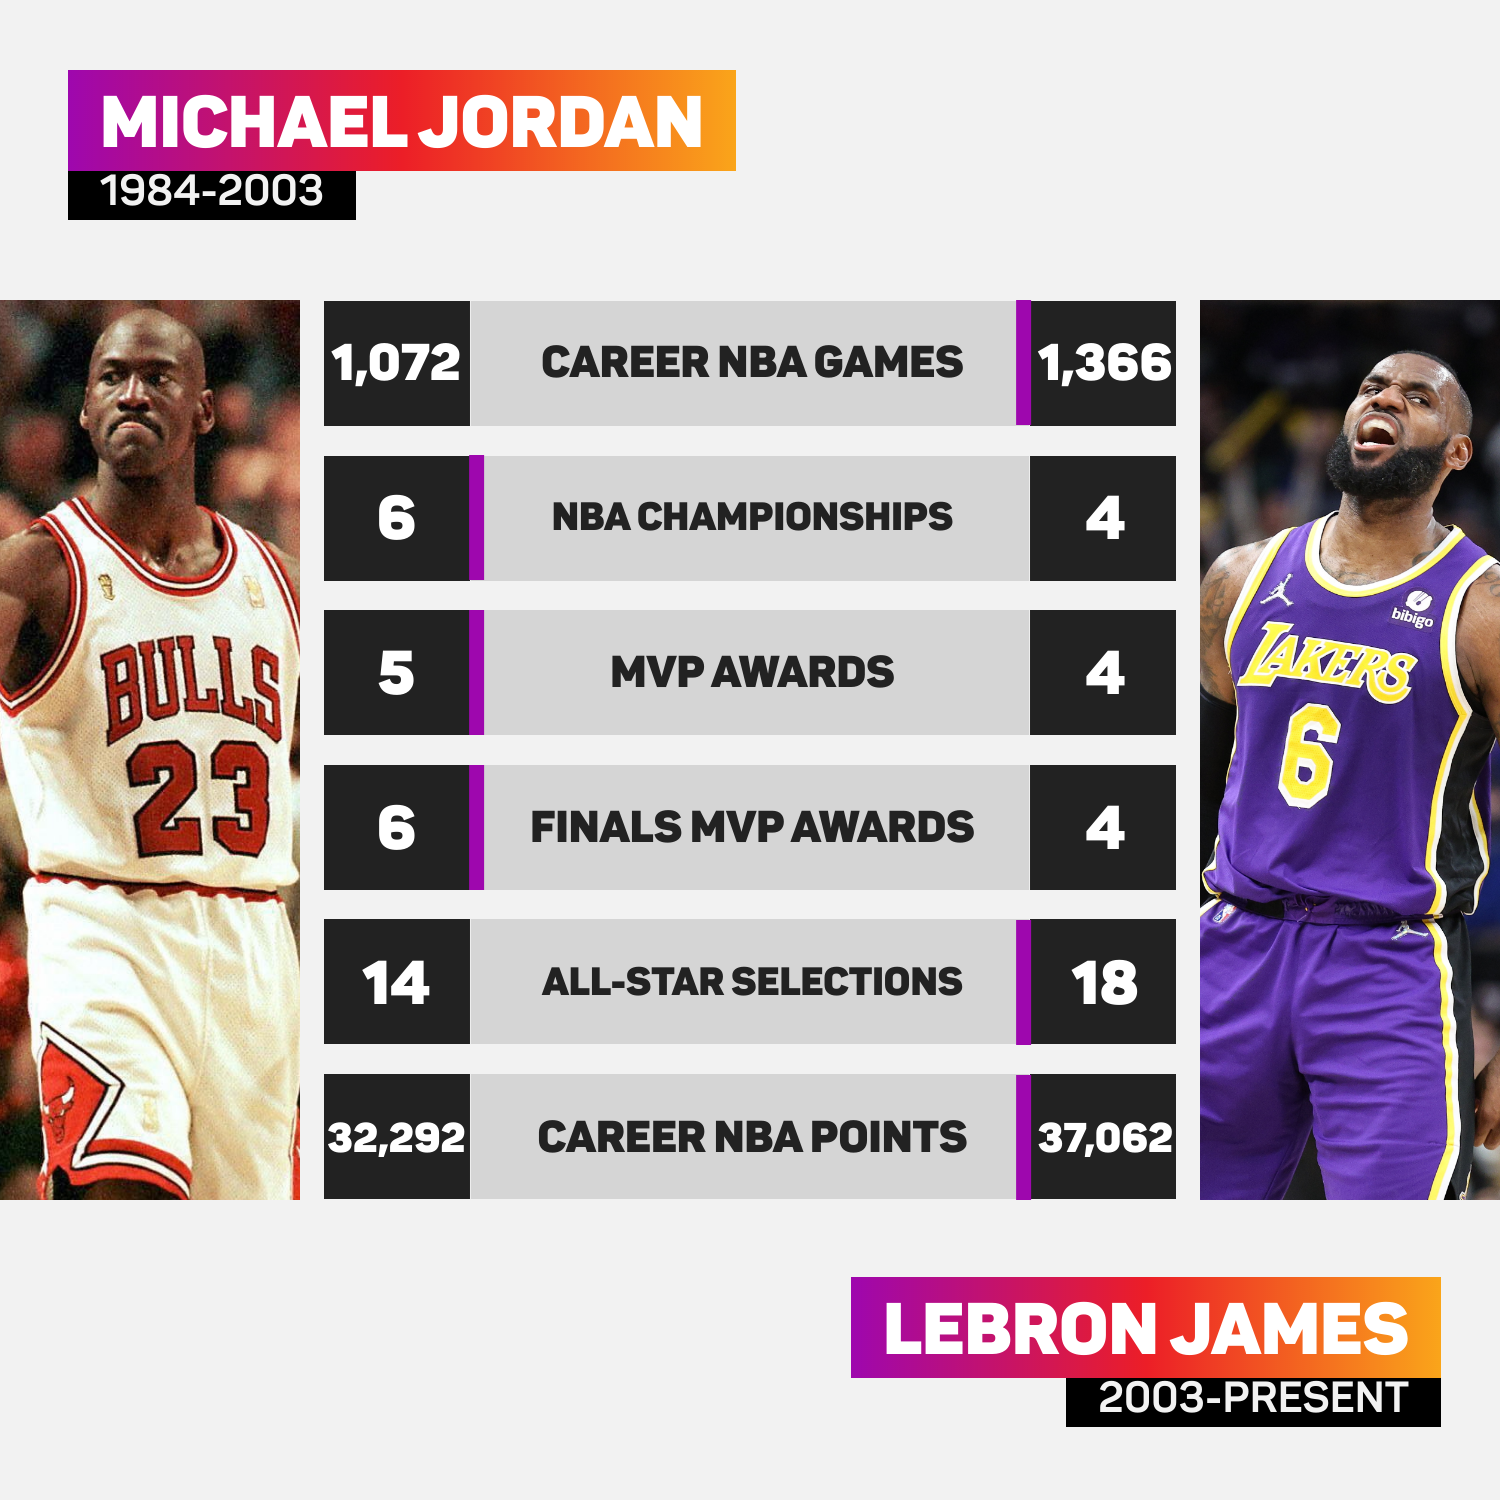 Michael Jordan and LeBron James have enjoyed hugely successful NBA careers